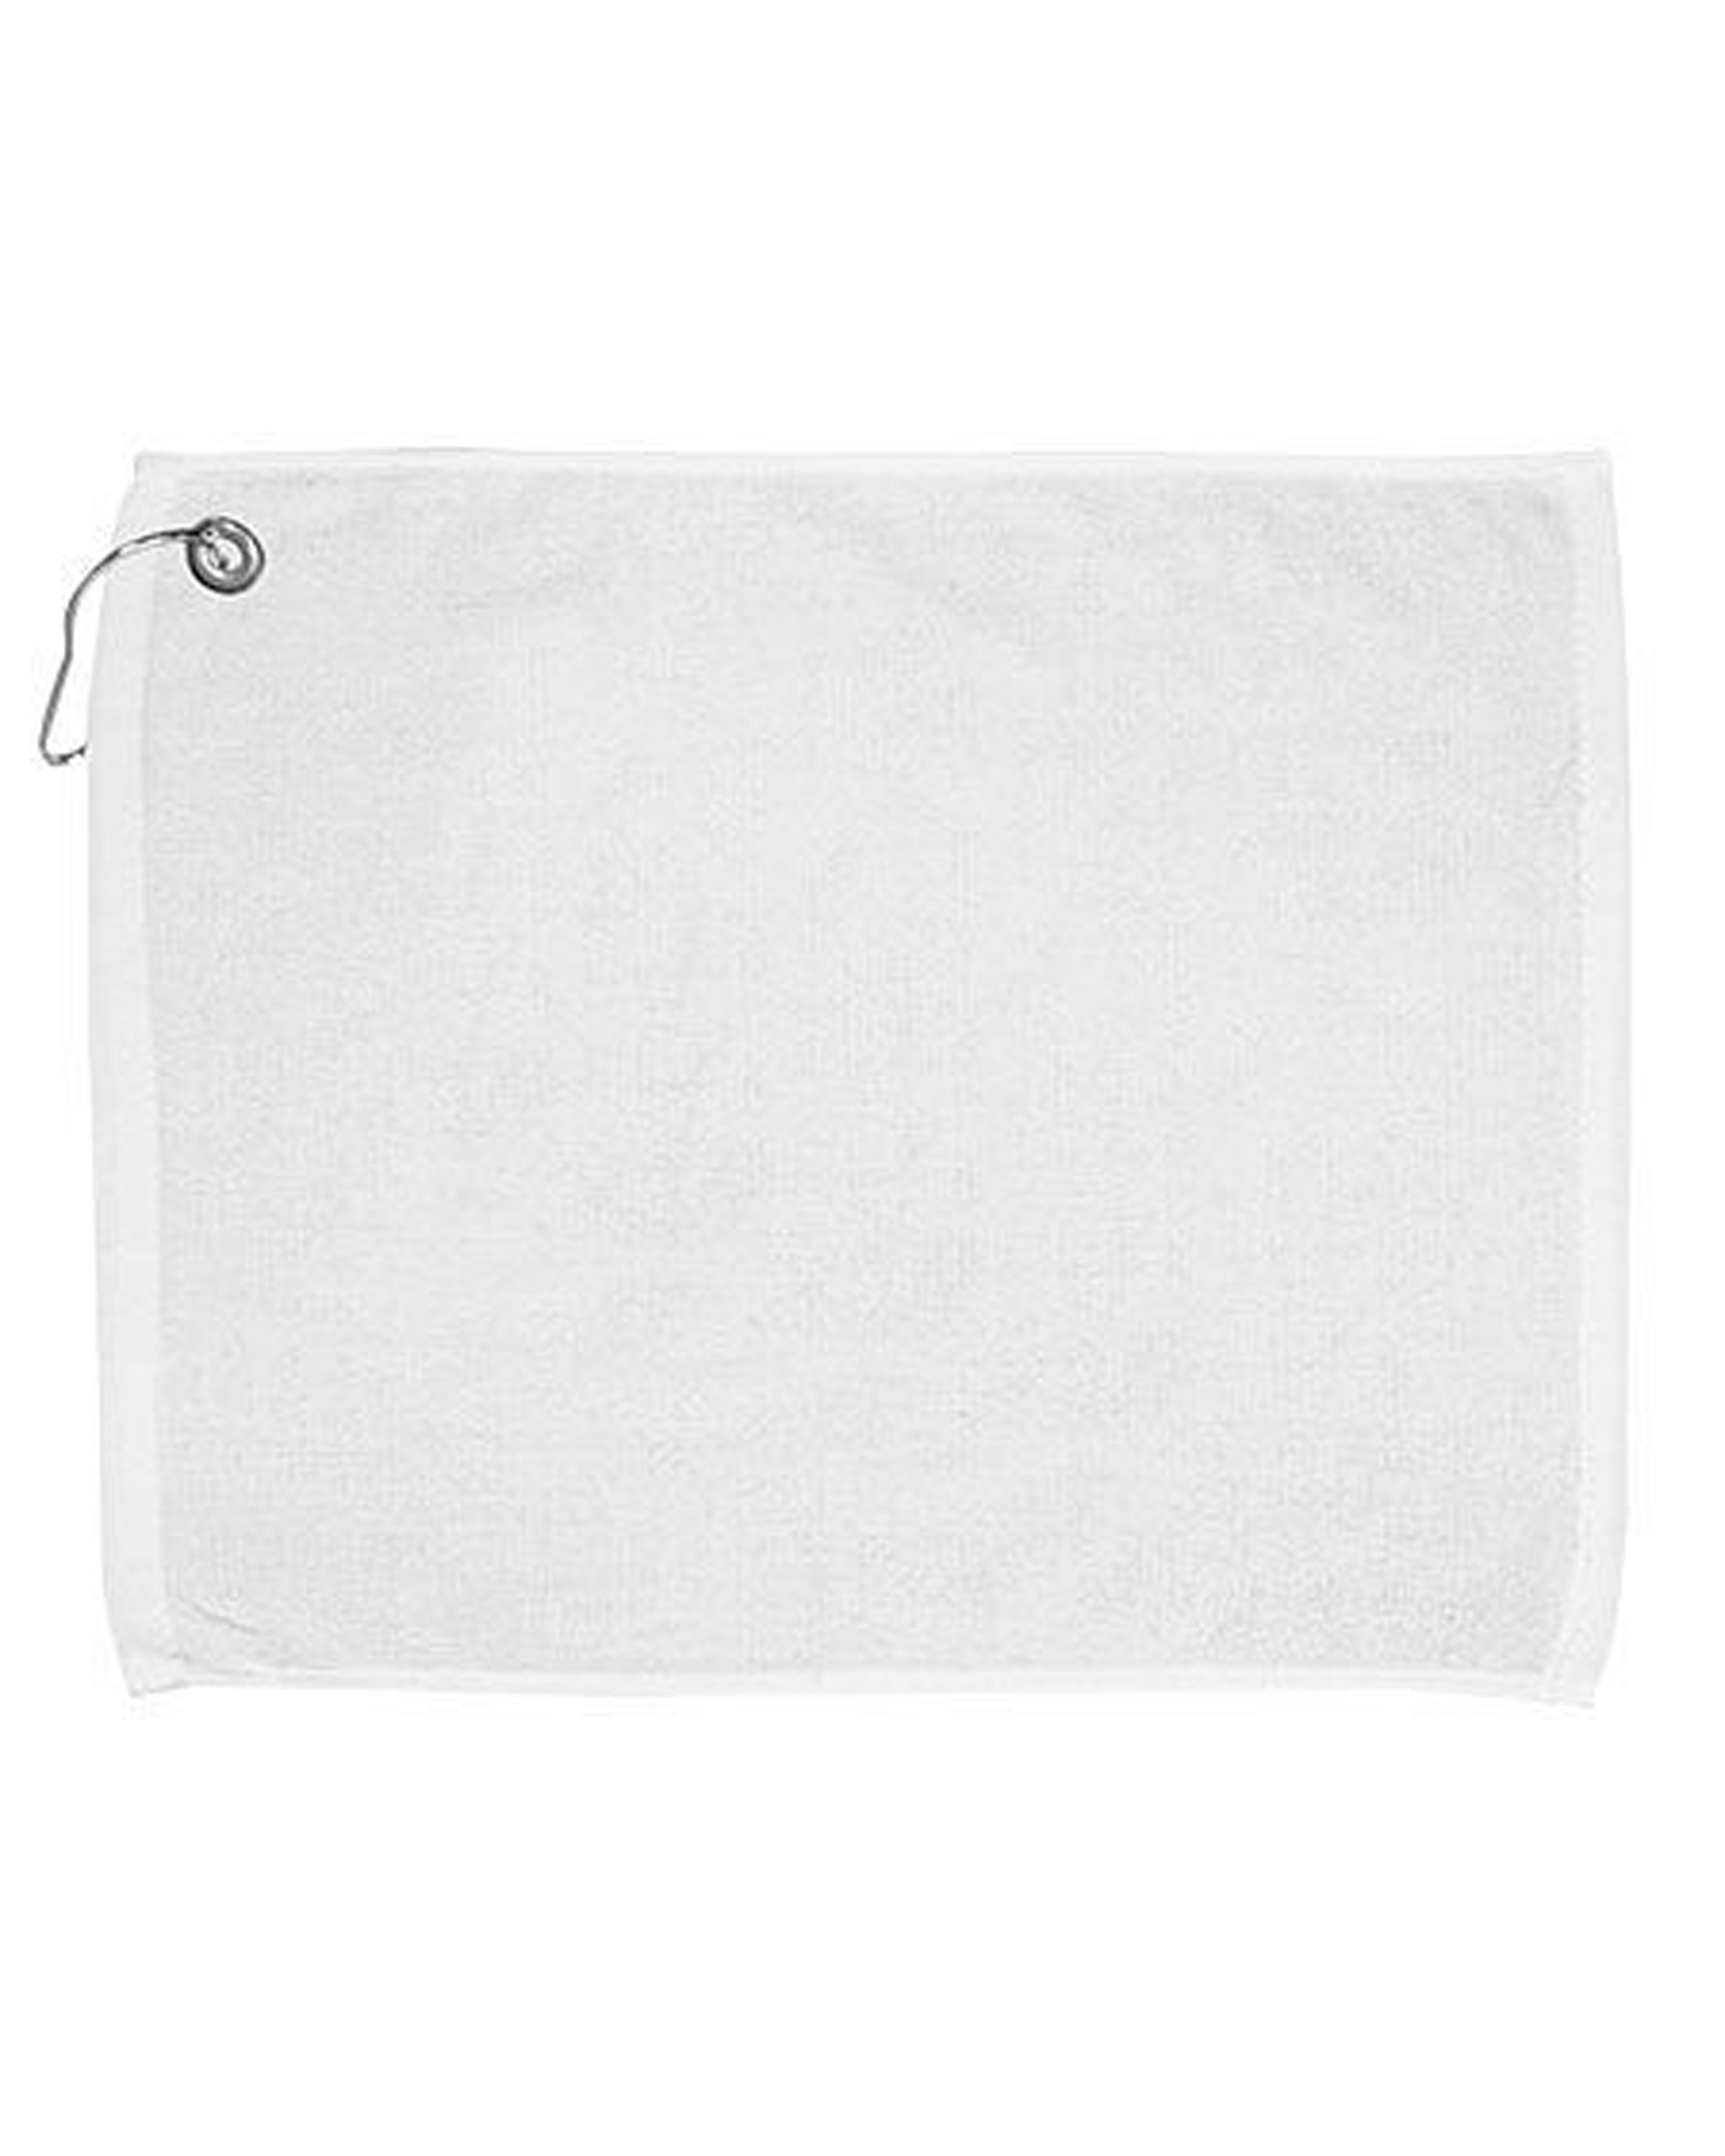 Carmel Towels C162523GH Hemmed Towel with Grommet and Hook